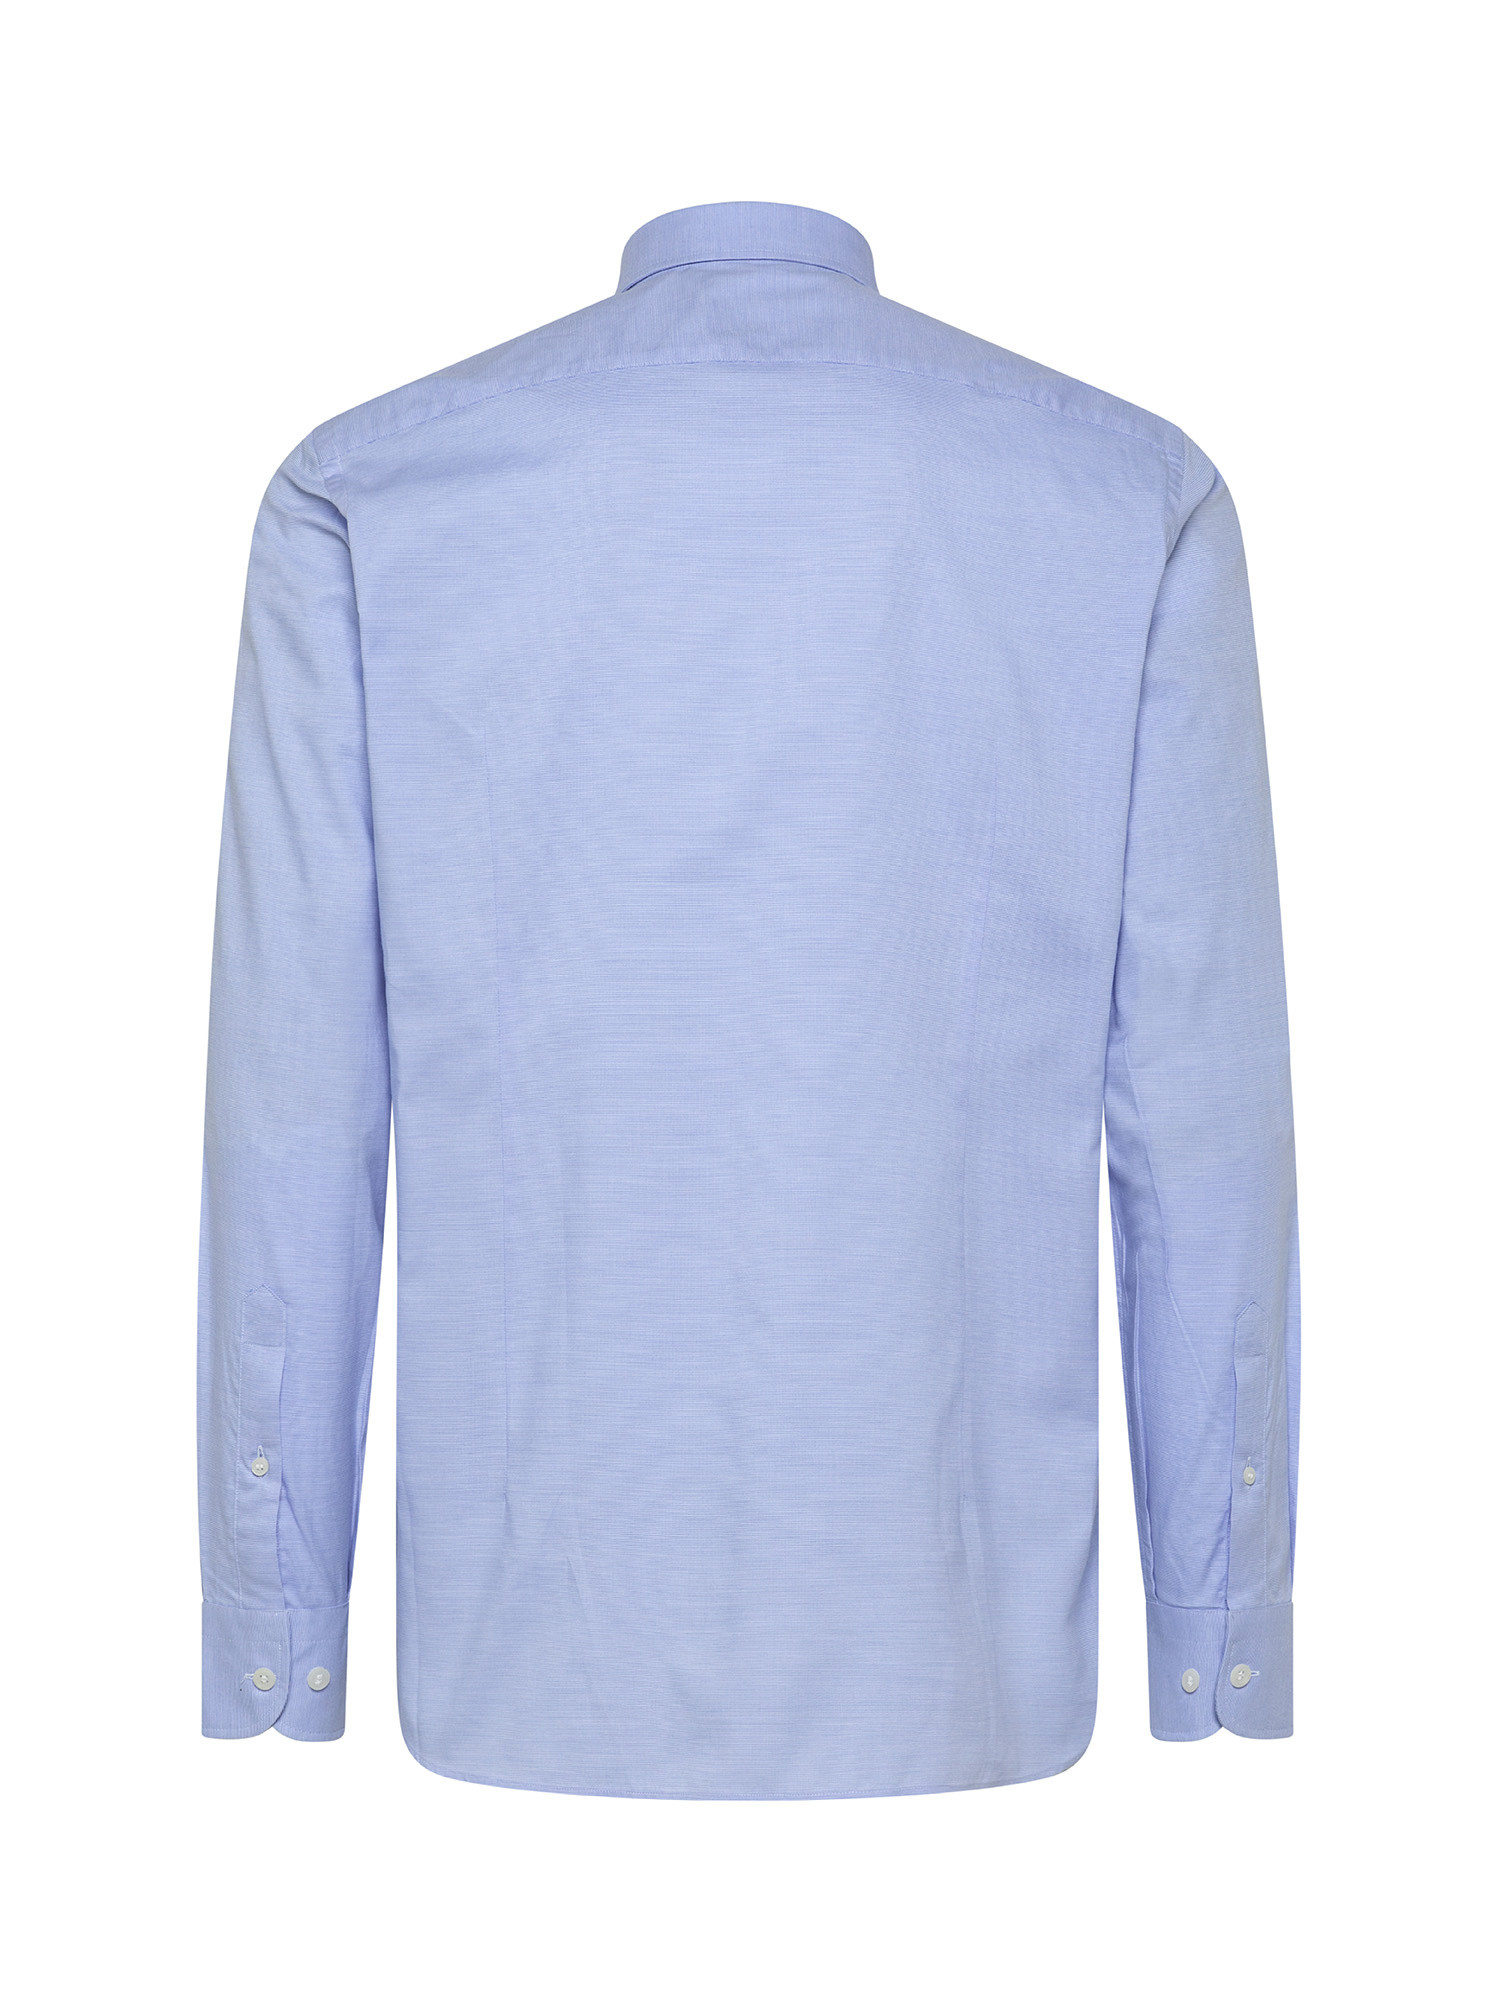 Slim fit shirt in pure cotton, Blue Celeste, large image number 2